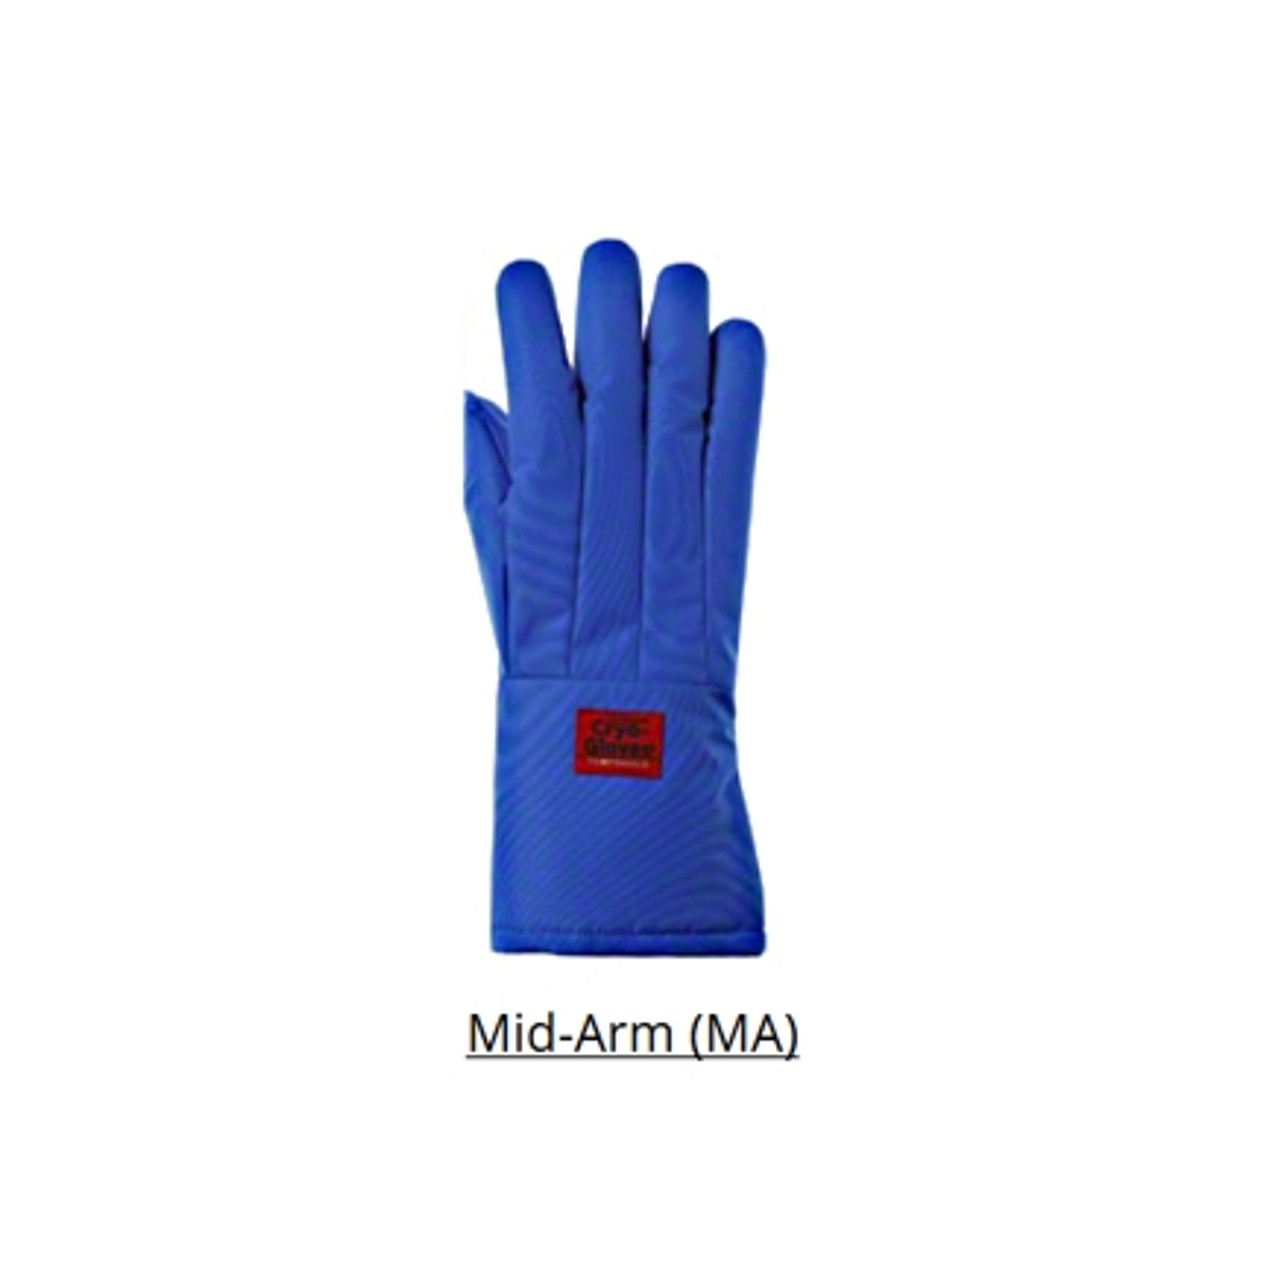 Tempshield Waterproof Cryo-Grip Gloves, Mid-Arm, X-Large (11), Pink